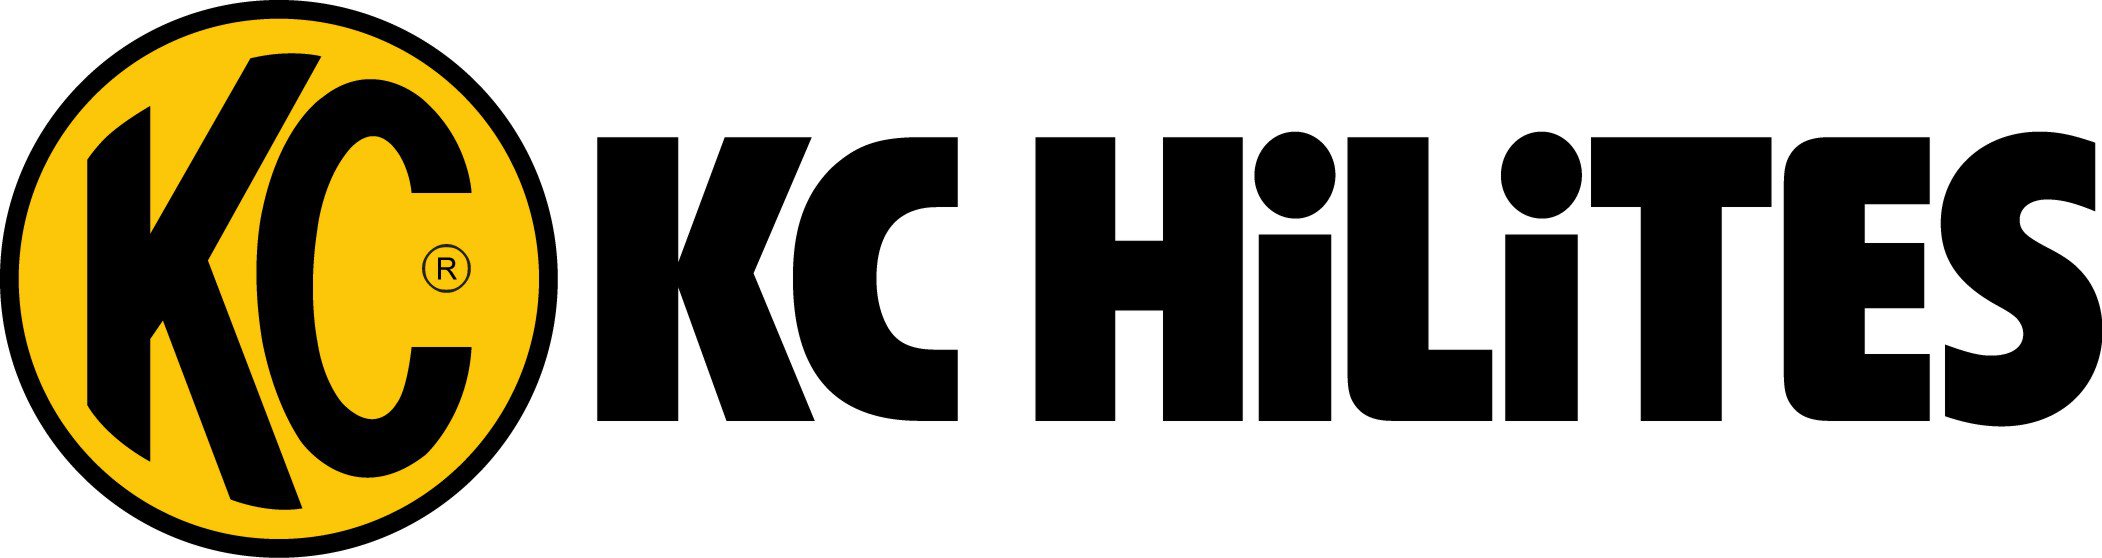 KCHiLiTES_company_logo